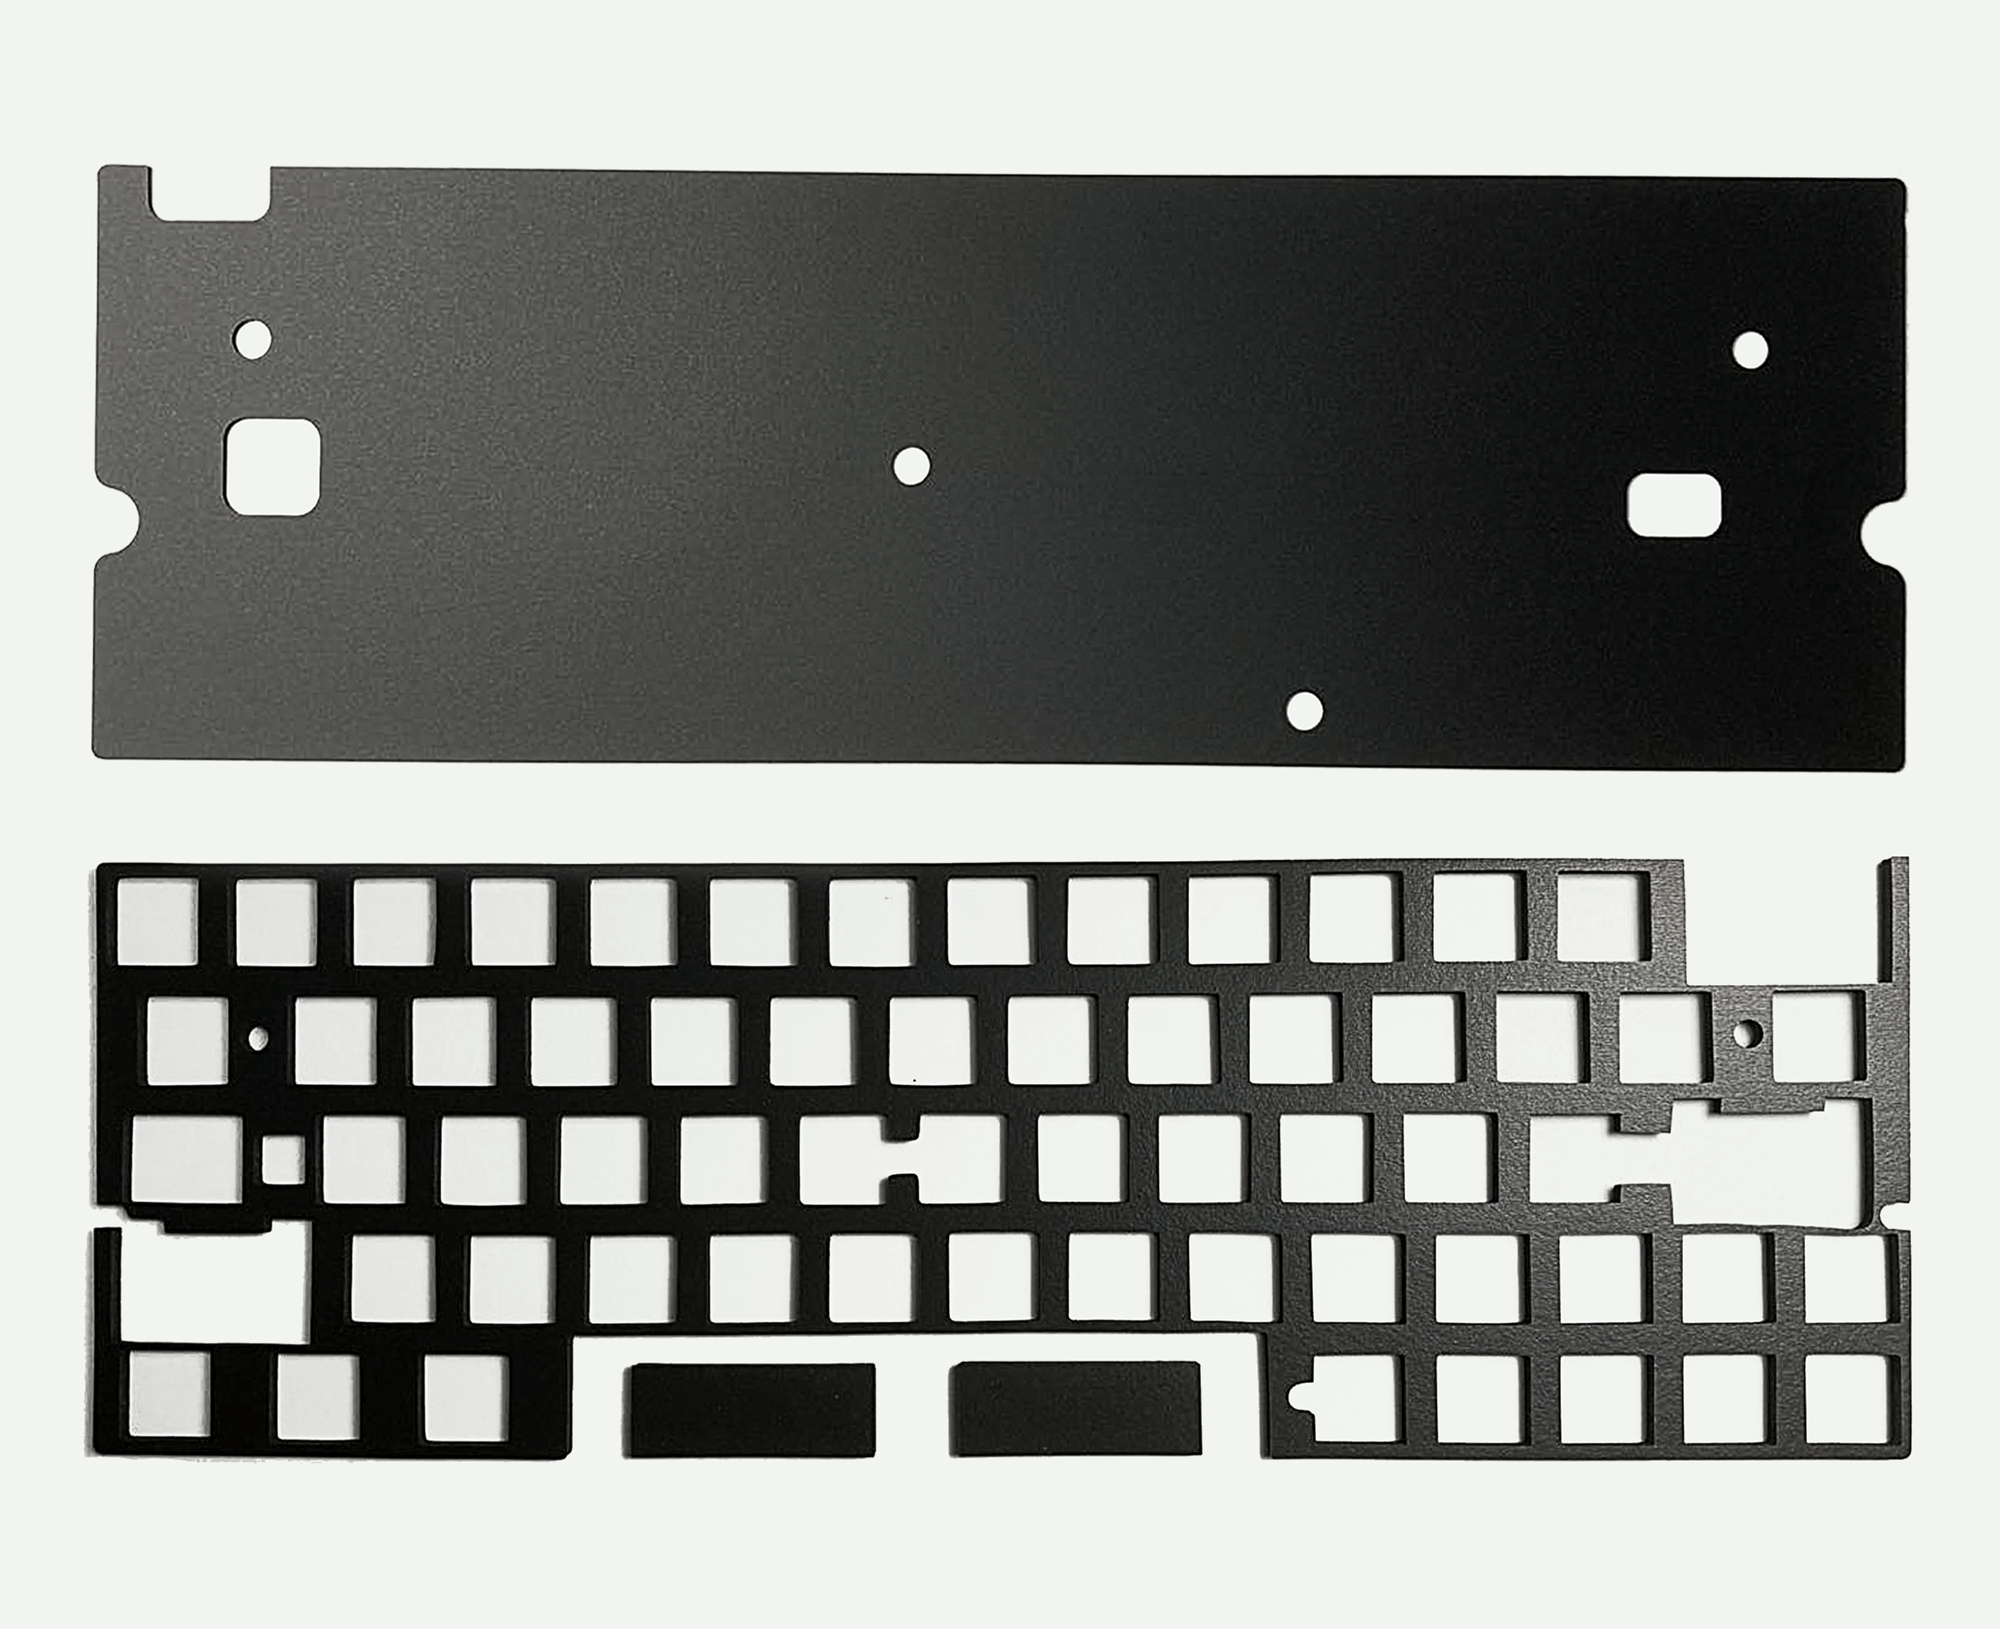 Amortiguador de espuma MelGeek Raindrop compatible con 60% teclado mecánico Mojo60